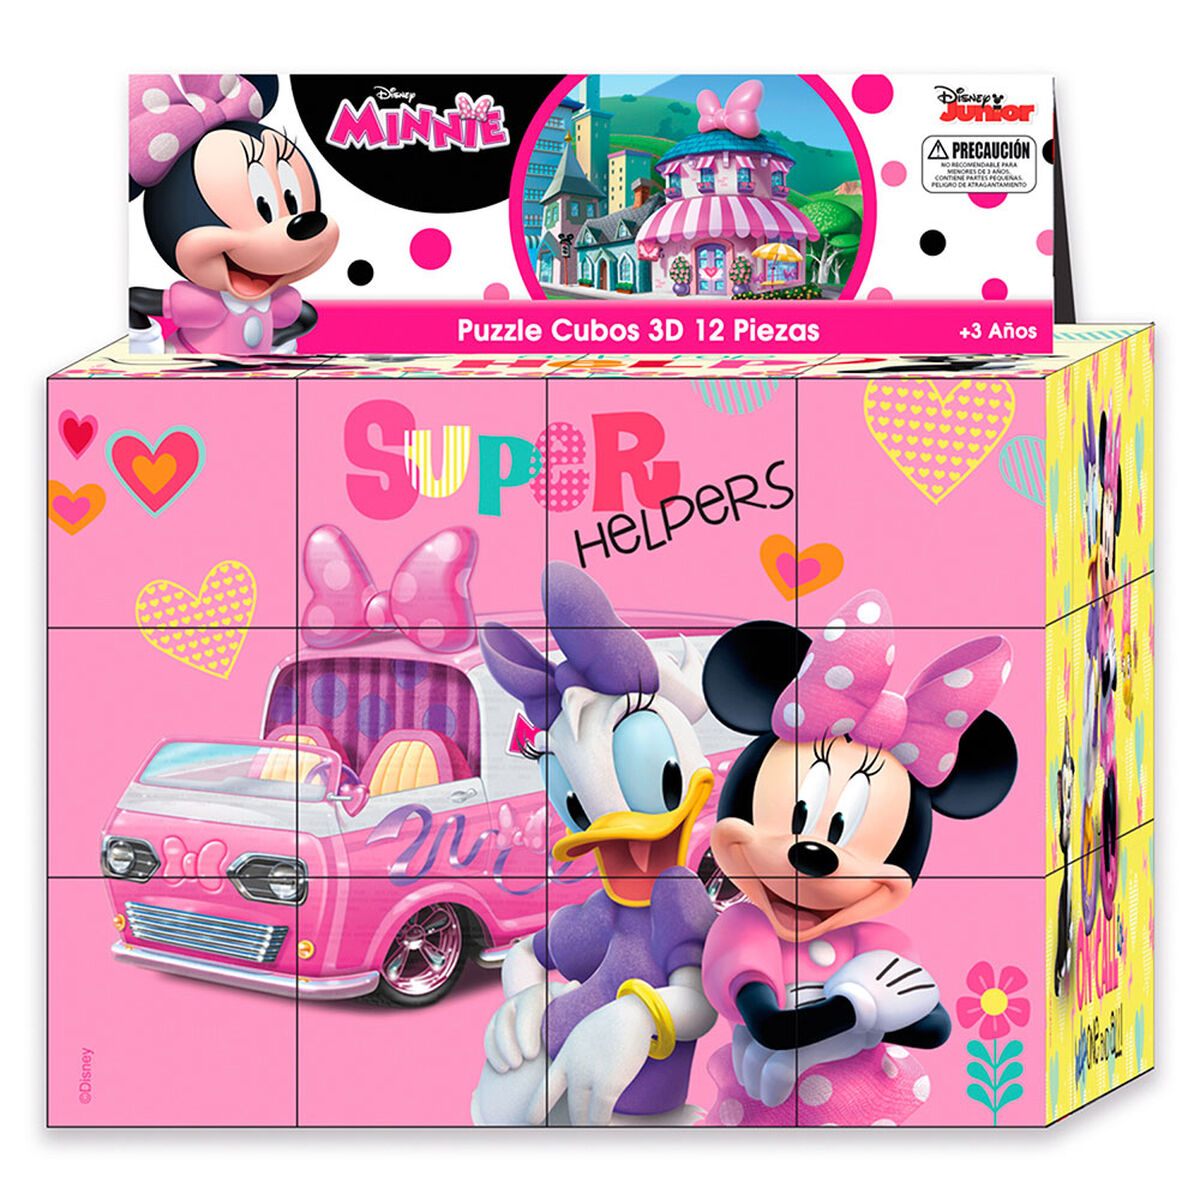 Puzzle Cubos 3D 12 Piezas Minnie Disney